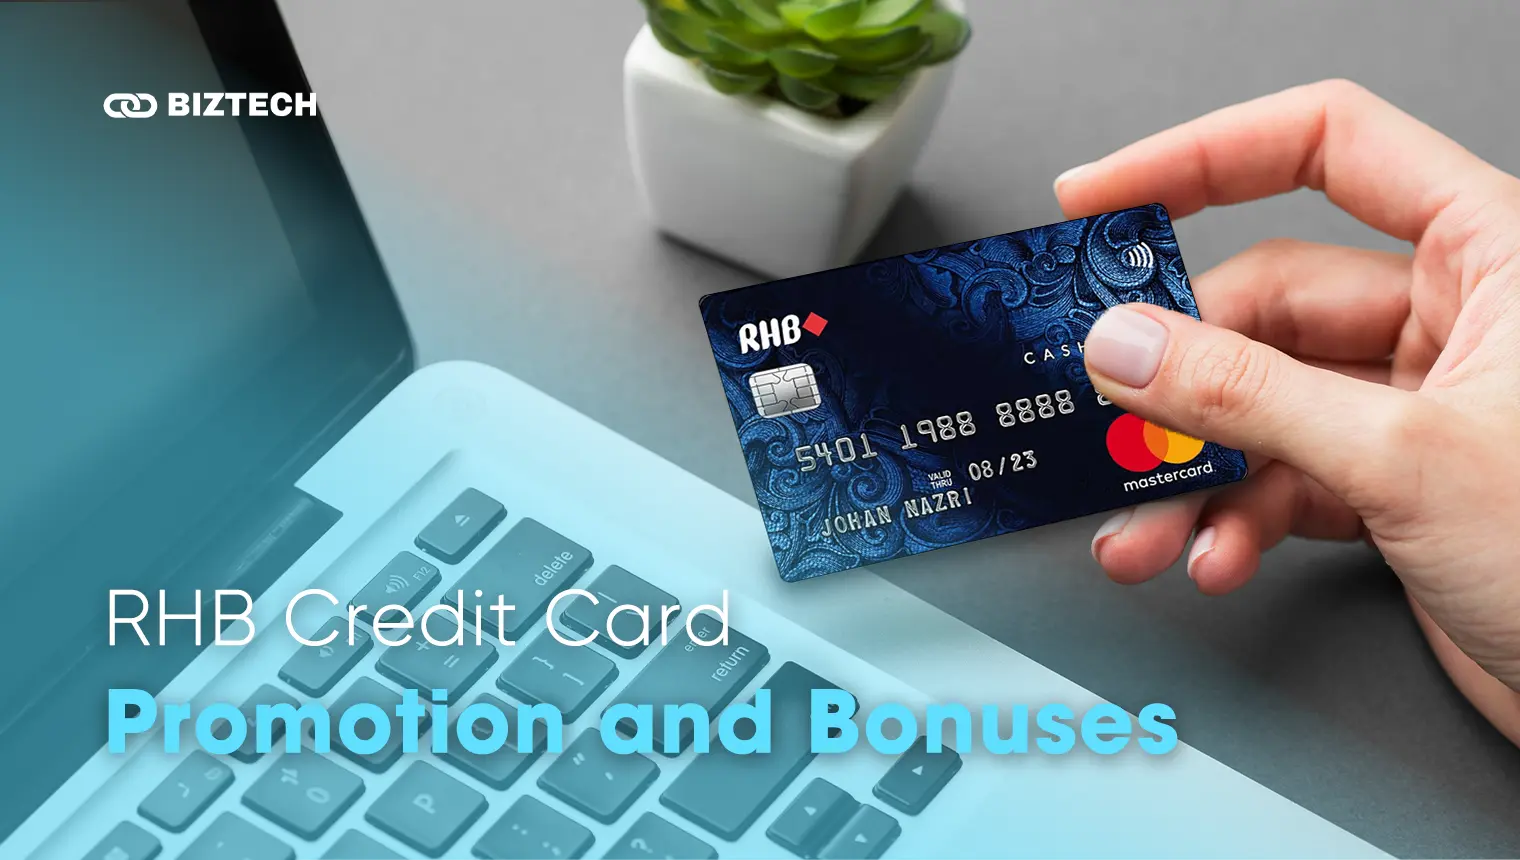 RHB Credit Card Promotion and Bonuses